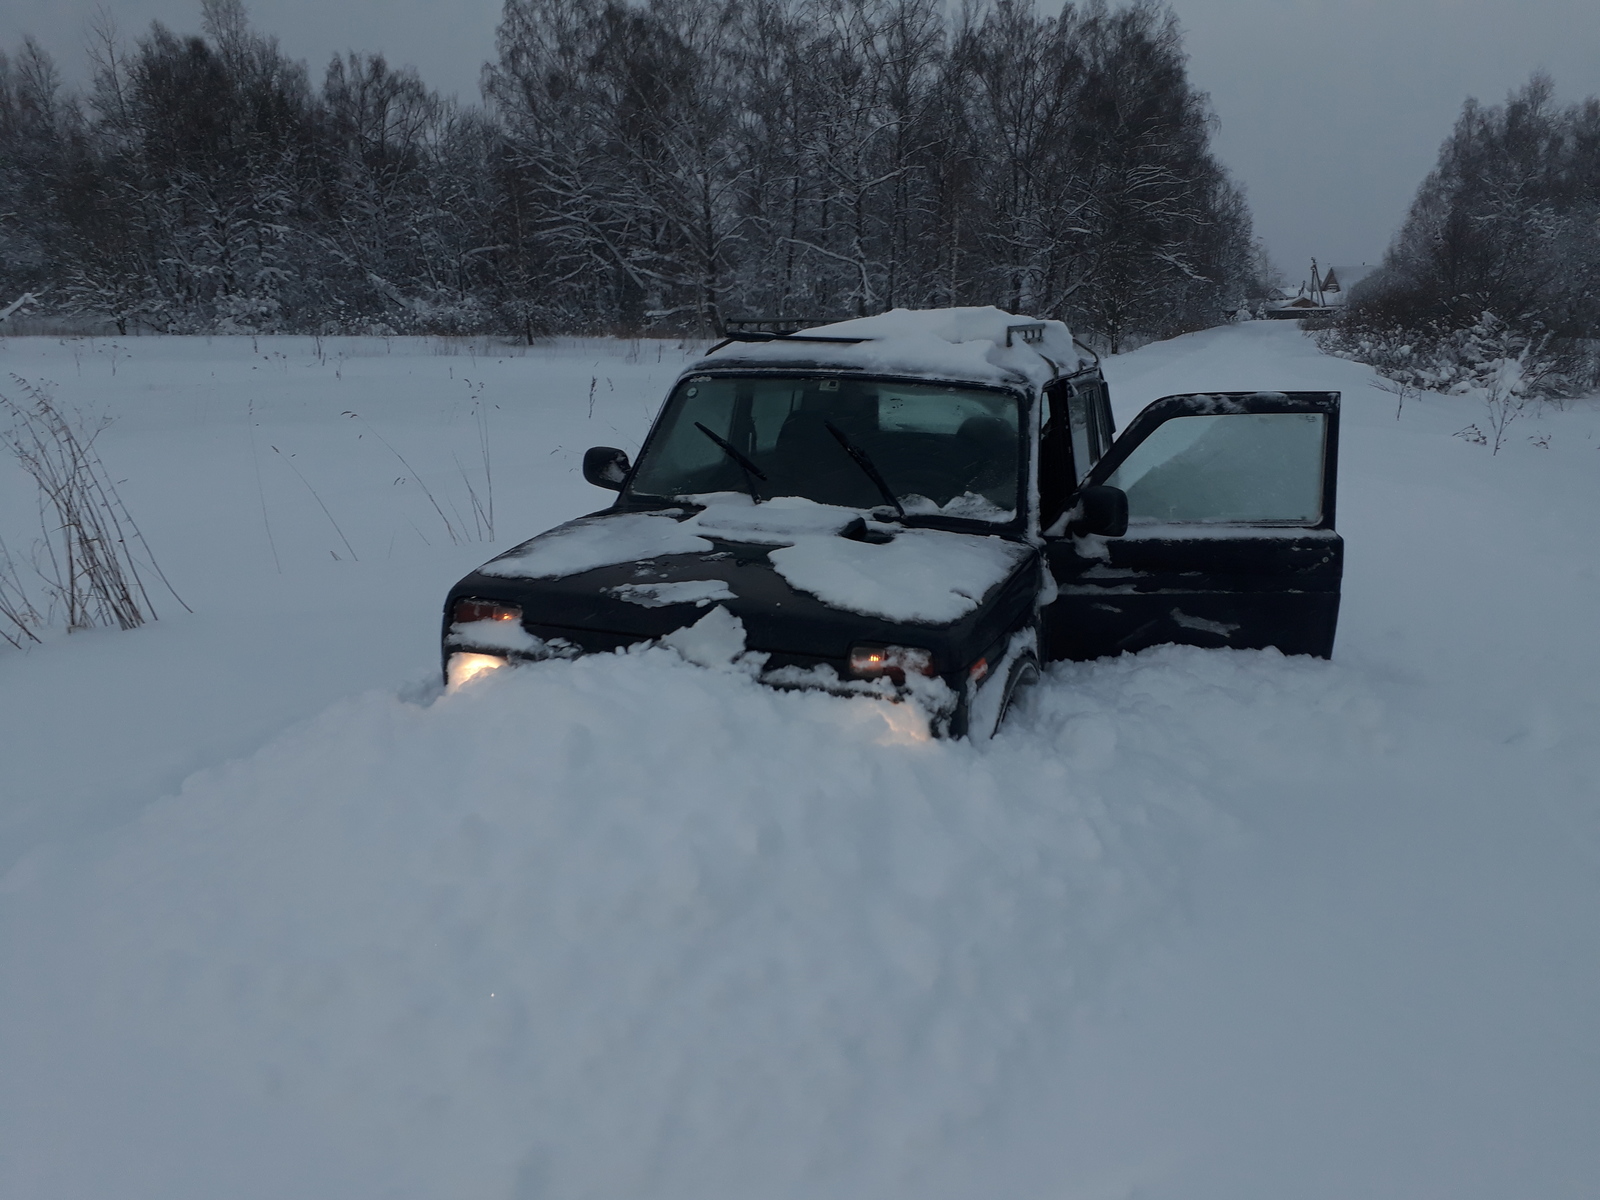 Niva in the snow. - Longpost, Pokatushki, Snowfall, Off road, Niva, My